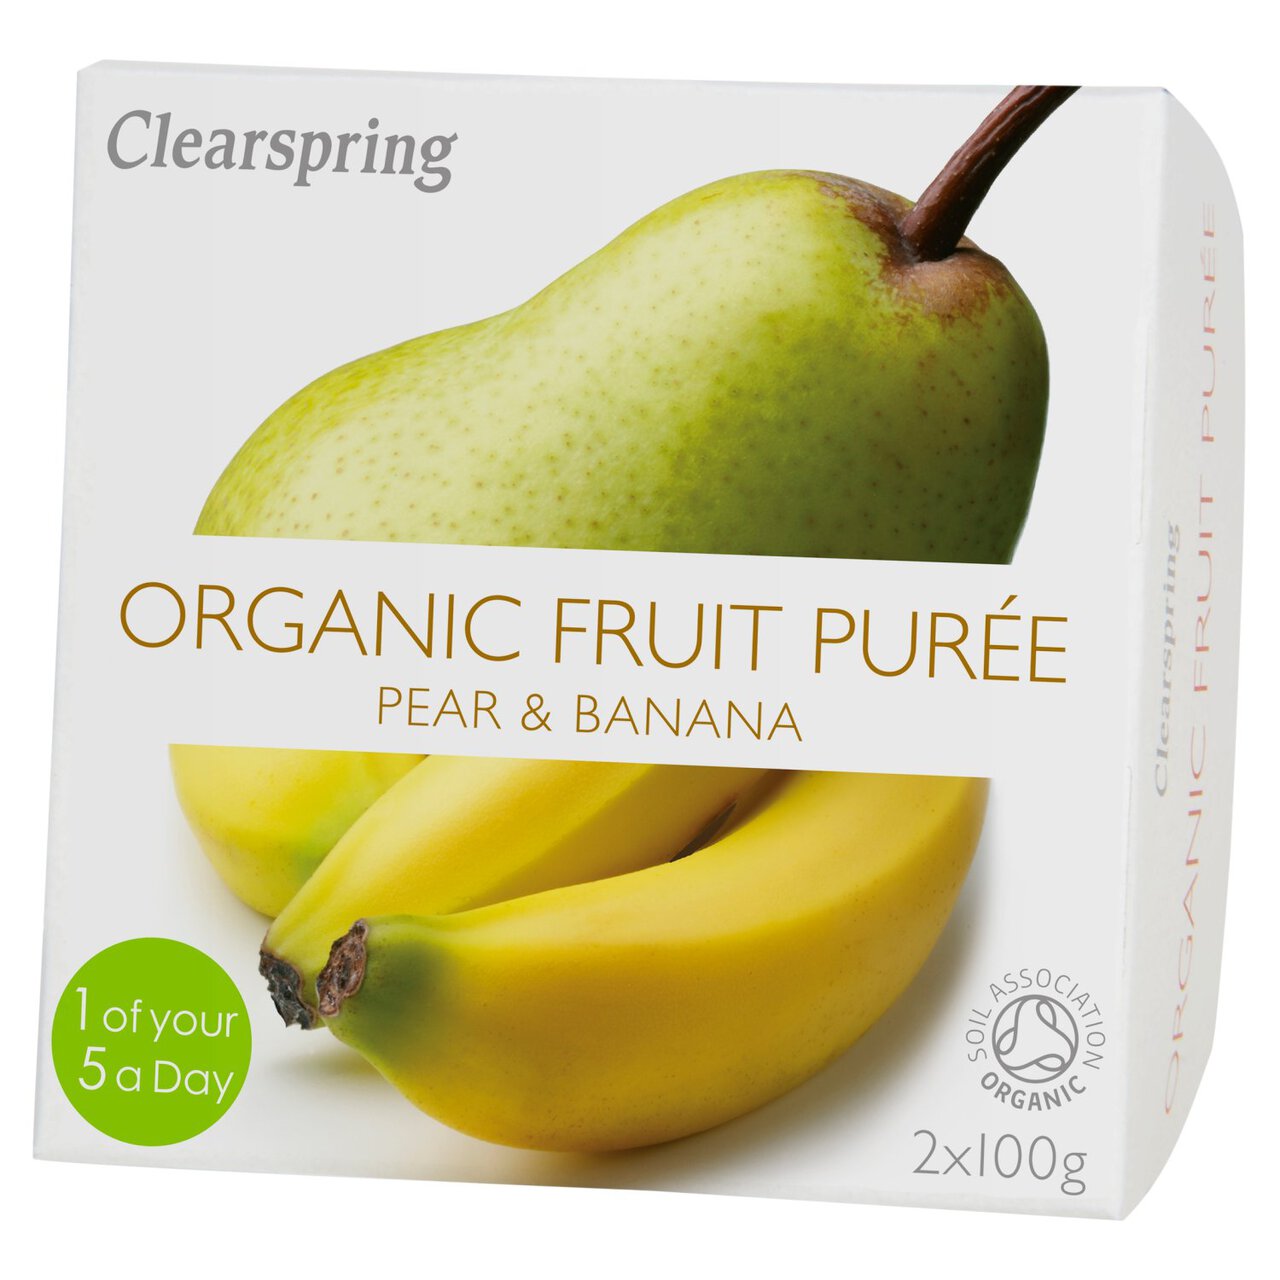 Clearspring Organic Pear & Banana Puree 2 x 100g